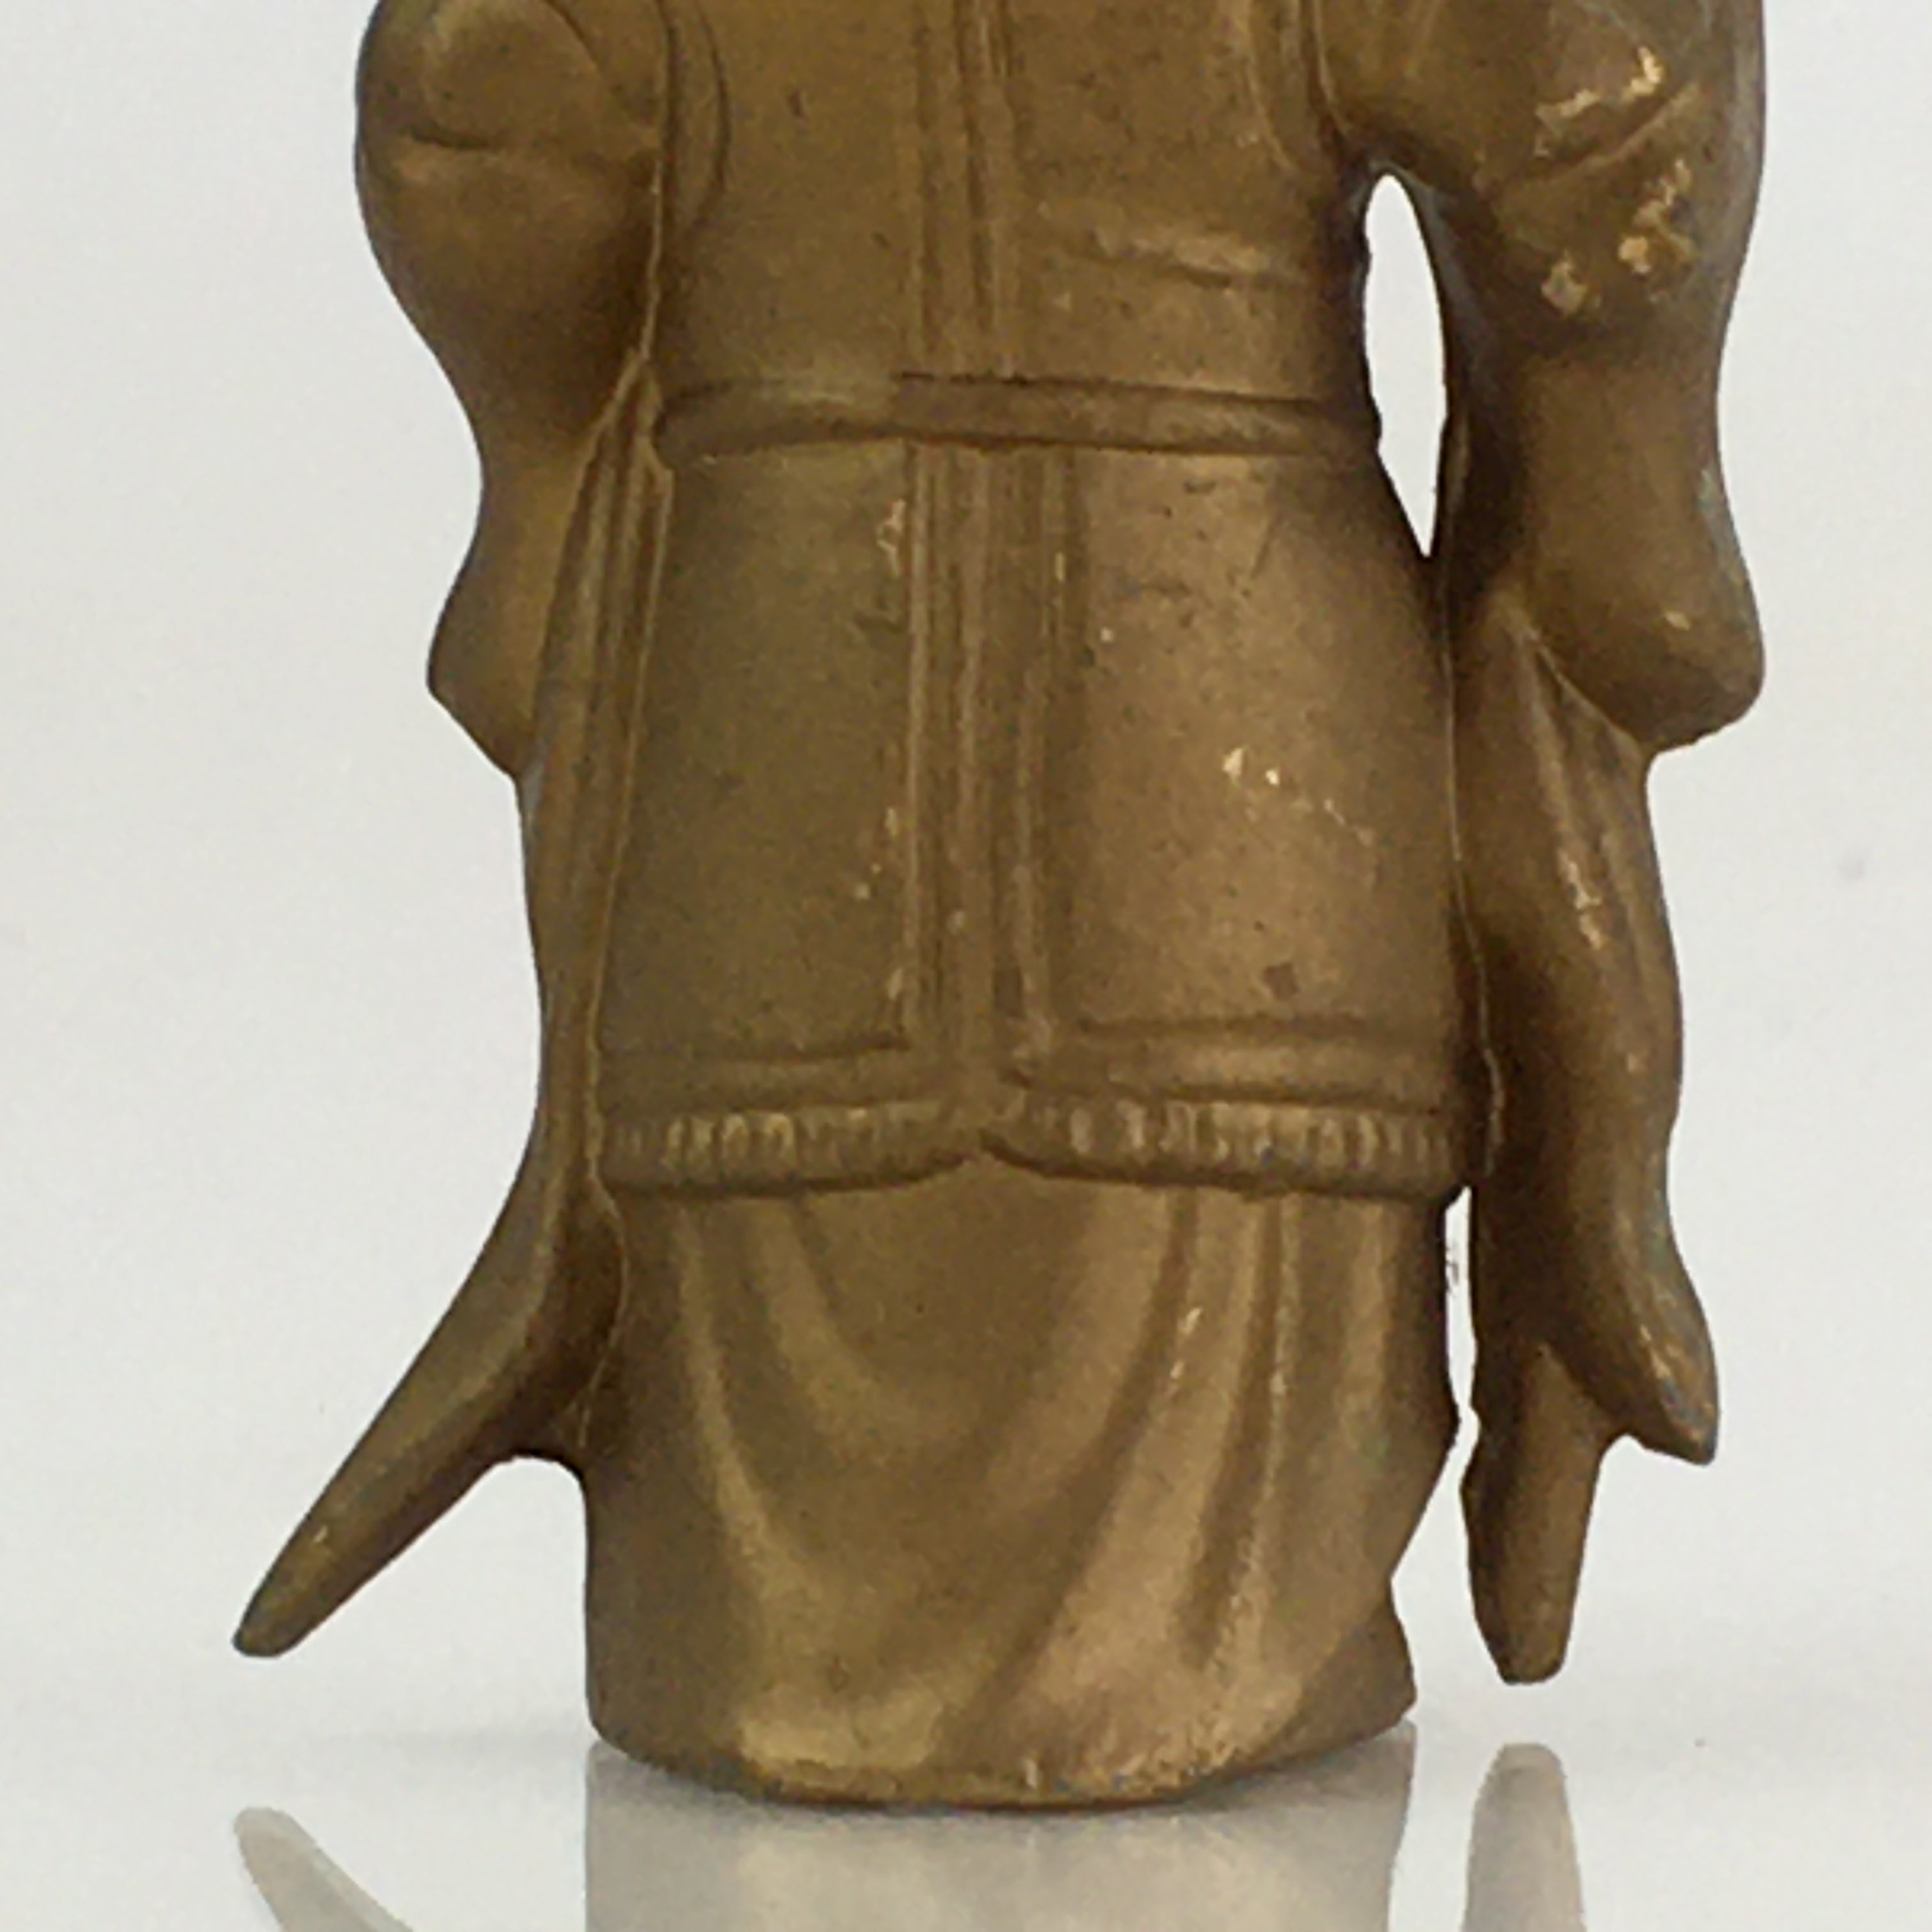 Japanese Small Figurine Bishamonten 7 Lucky Gods Metal Statue Paperweight JK382